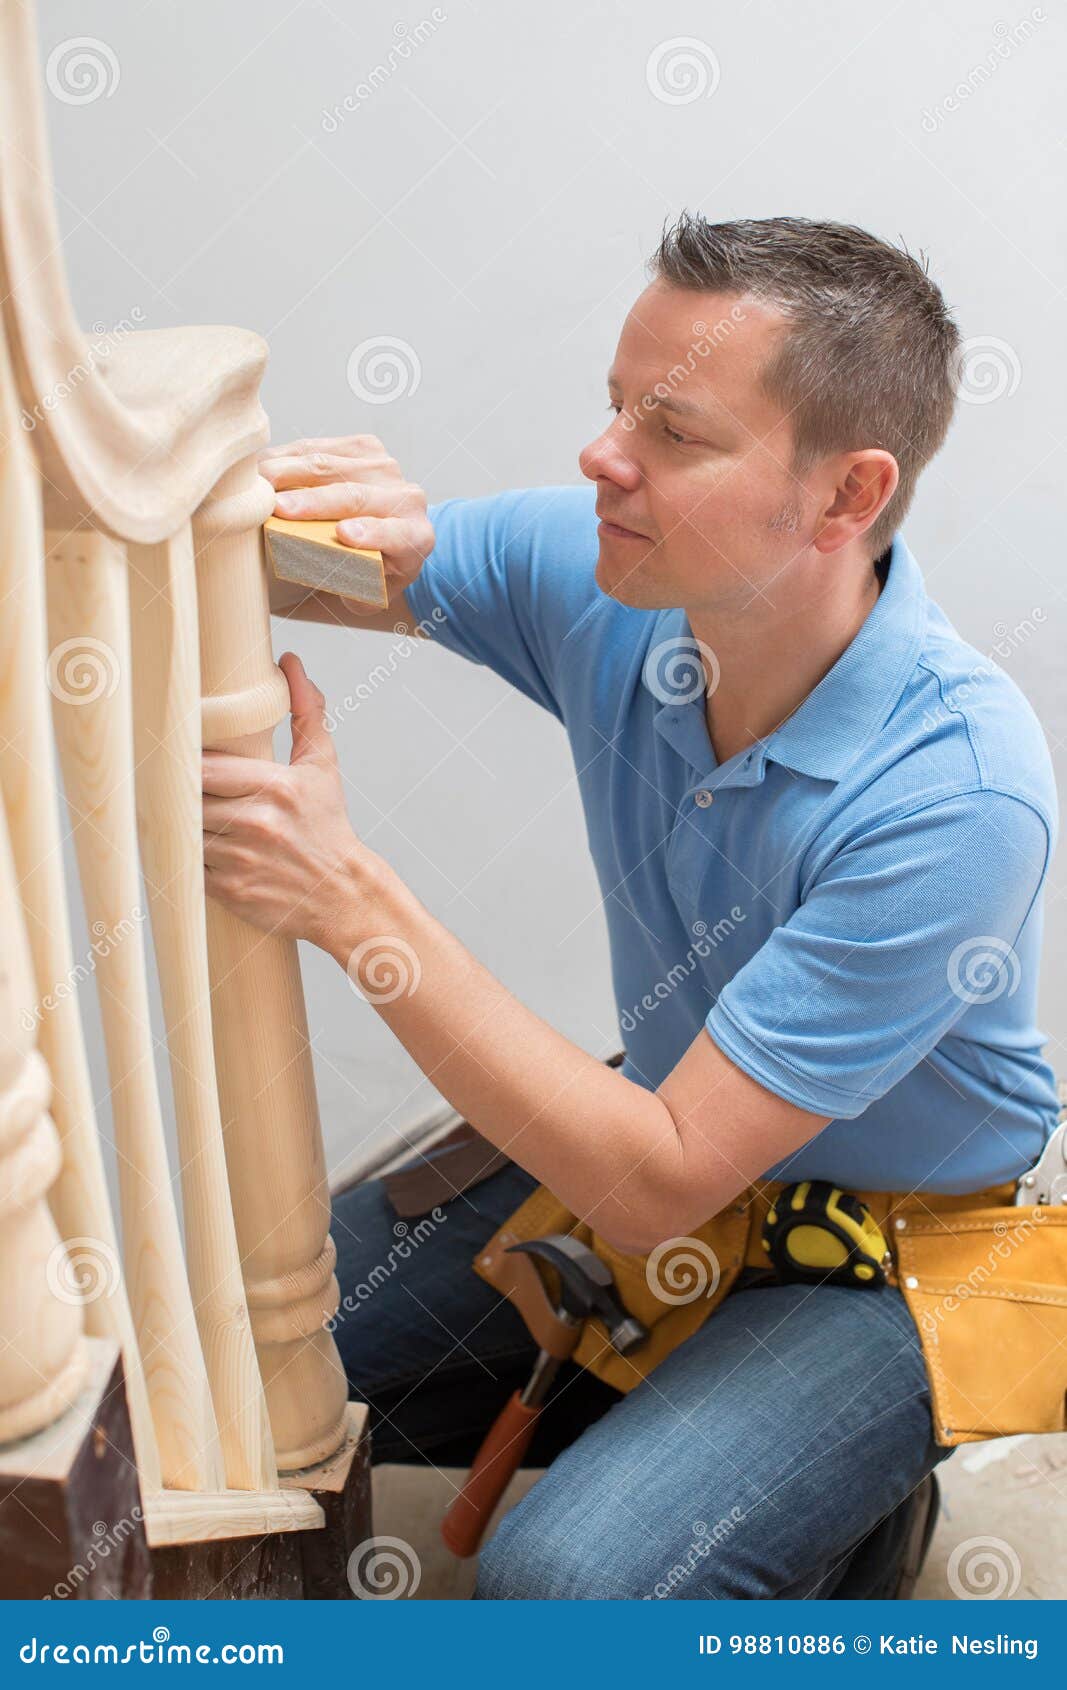 carpenter using sandpaper on bannister in home